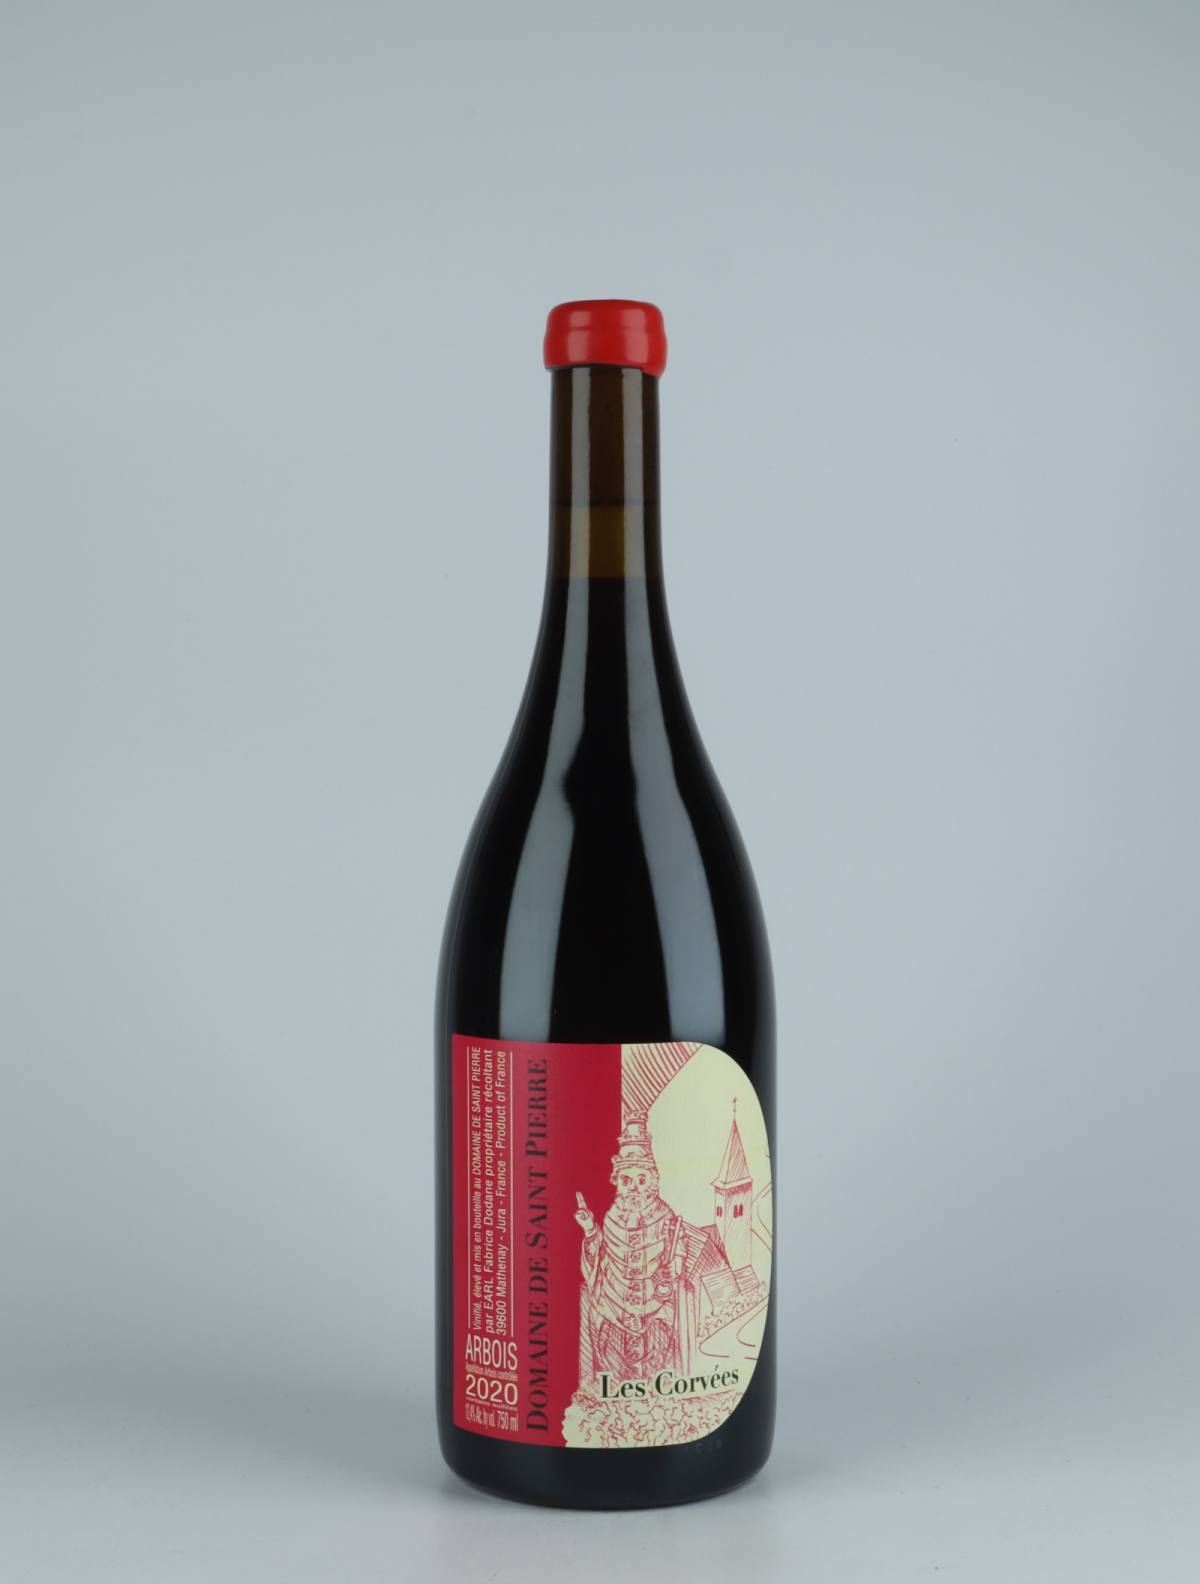 En flaske 2020 Arbois Rouge - Les Corvées Rødvin fra Domaine de Saint Pierre, Jura i Frankrig